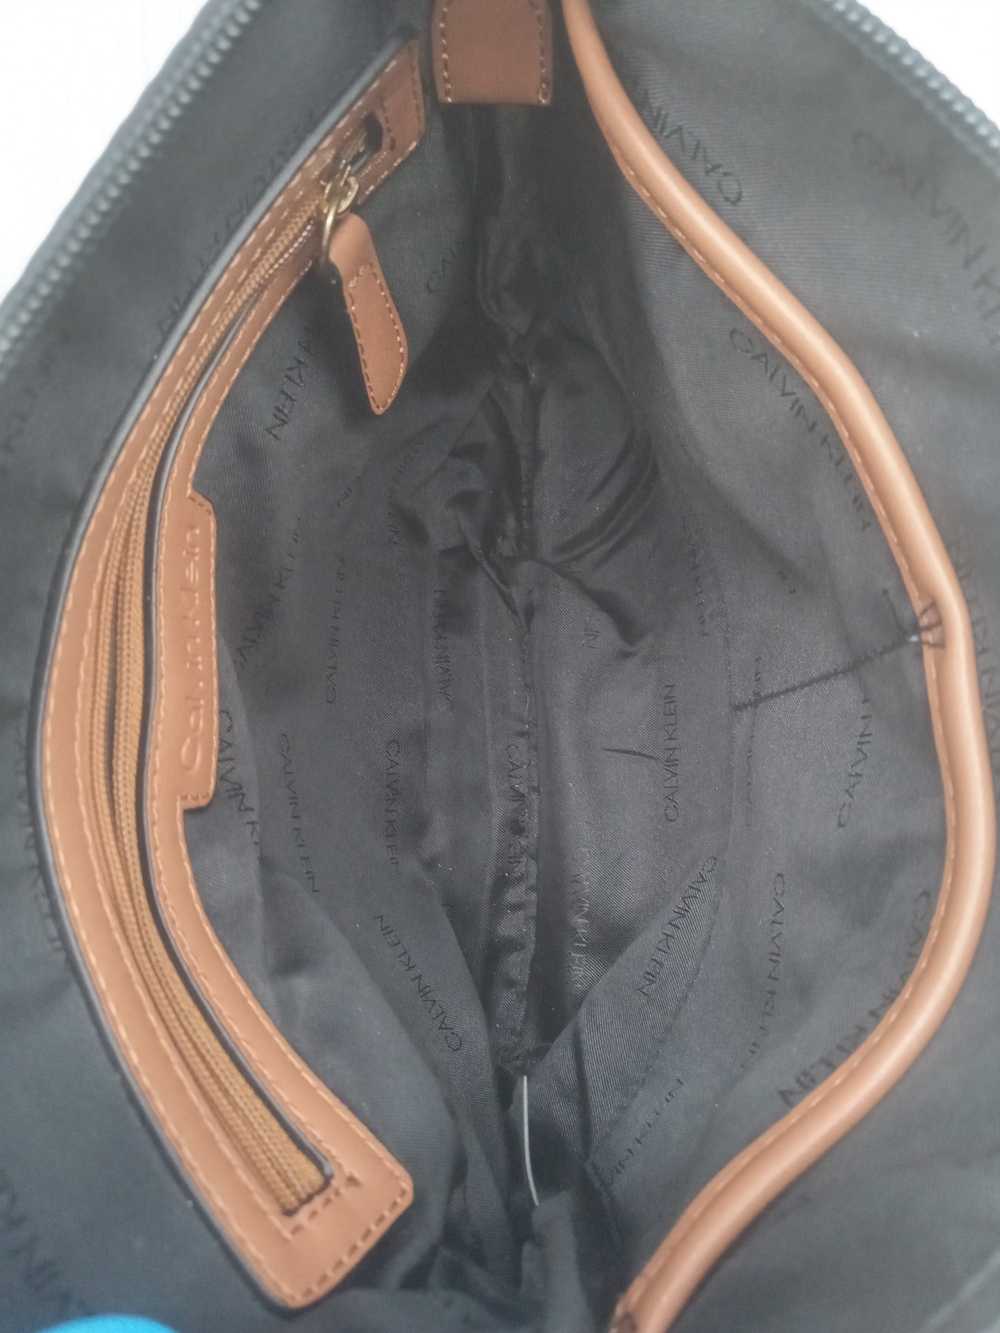 Calvin Klein Black Nylon Crossbody Handbag Purse - image 5